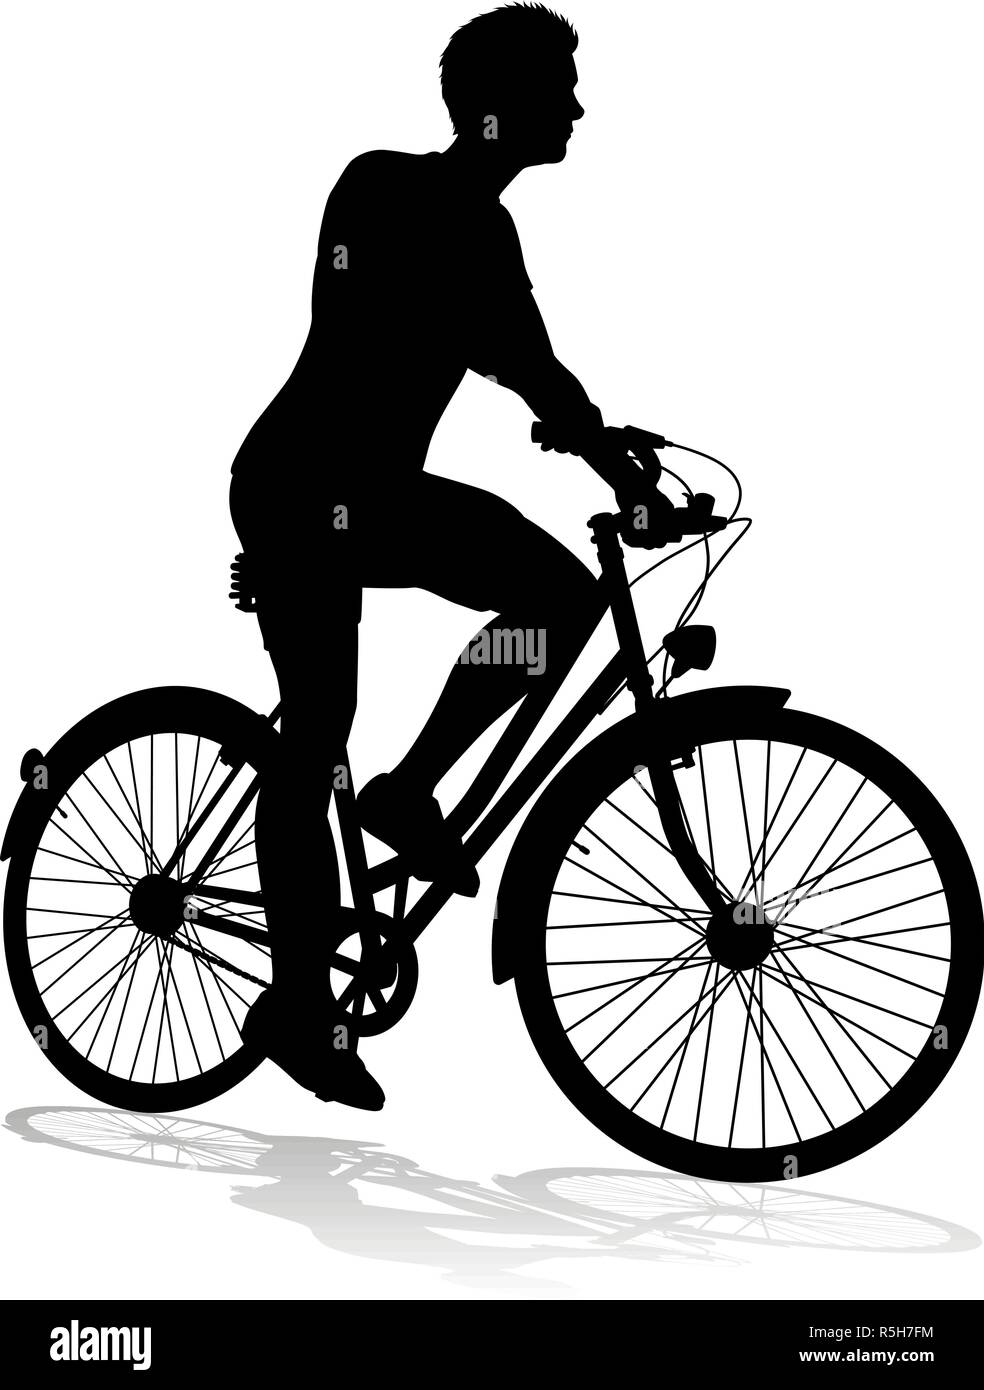 Bike Radfahrer Reiten Fahrrad Silhouette Stock Vektor